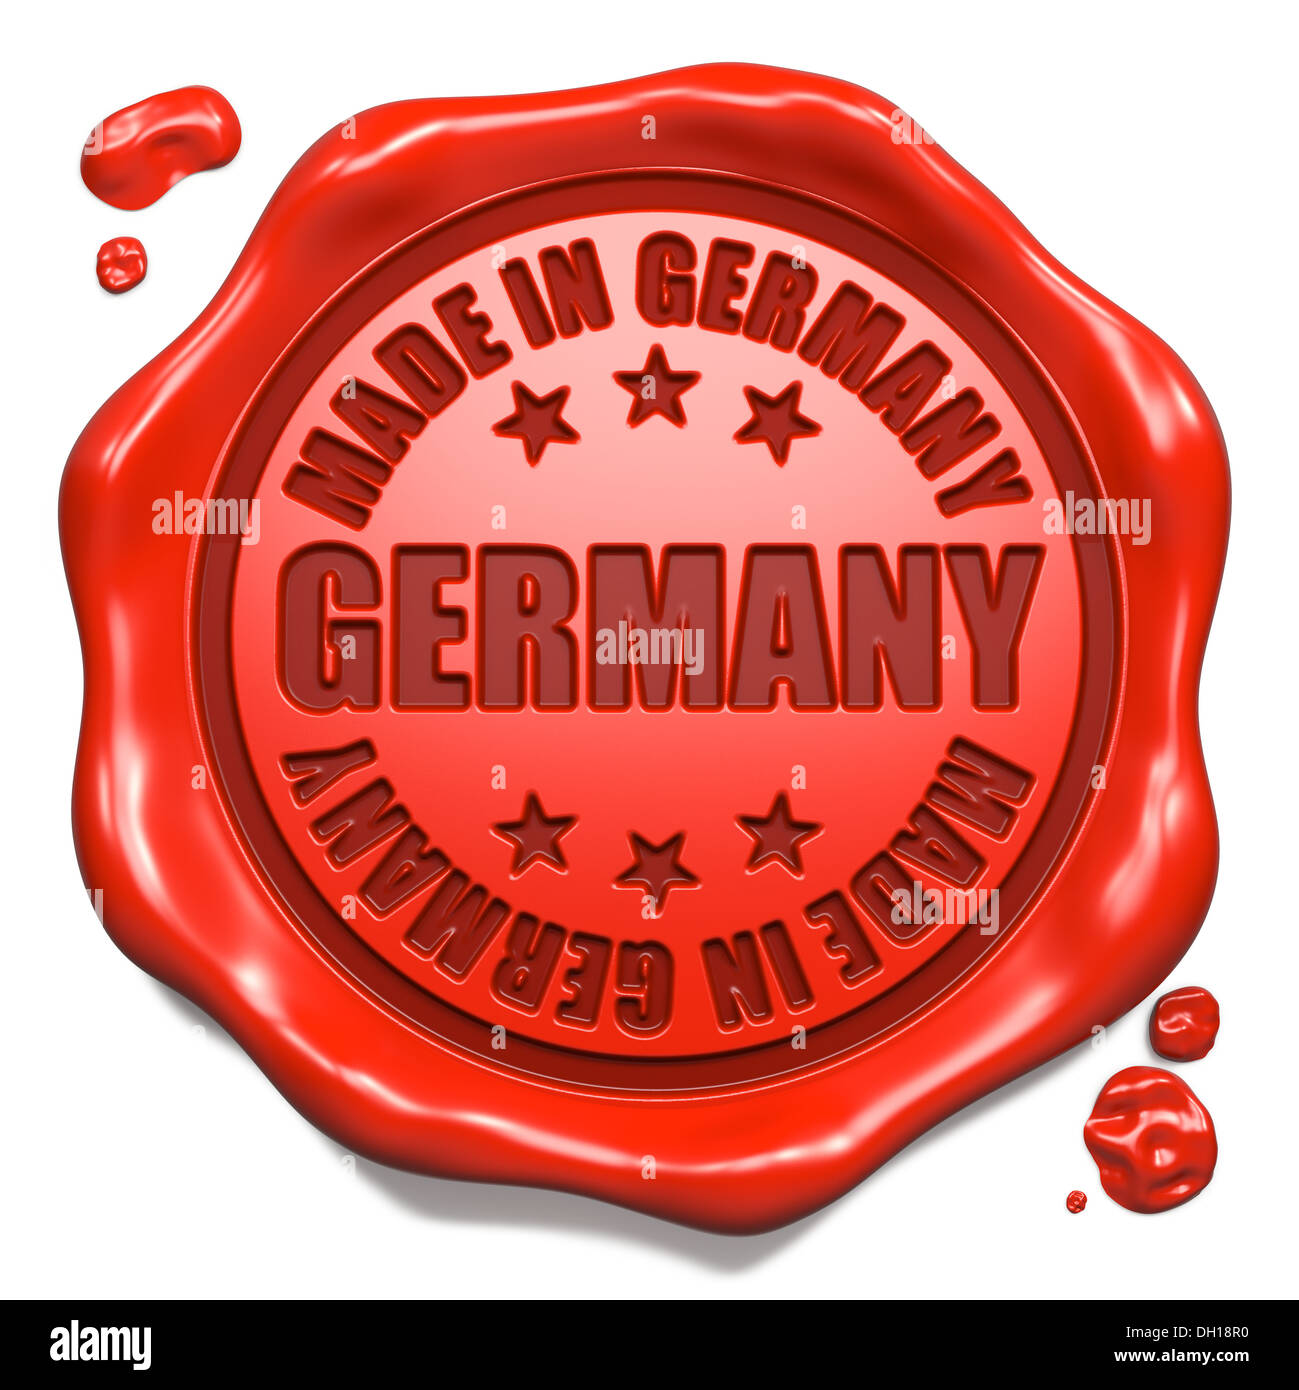 Made in Germany - Stempel auf Siegel aus rotem Wachs. Stockfoto